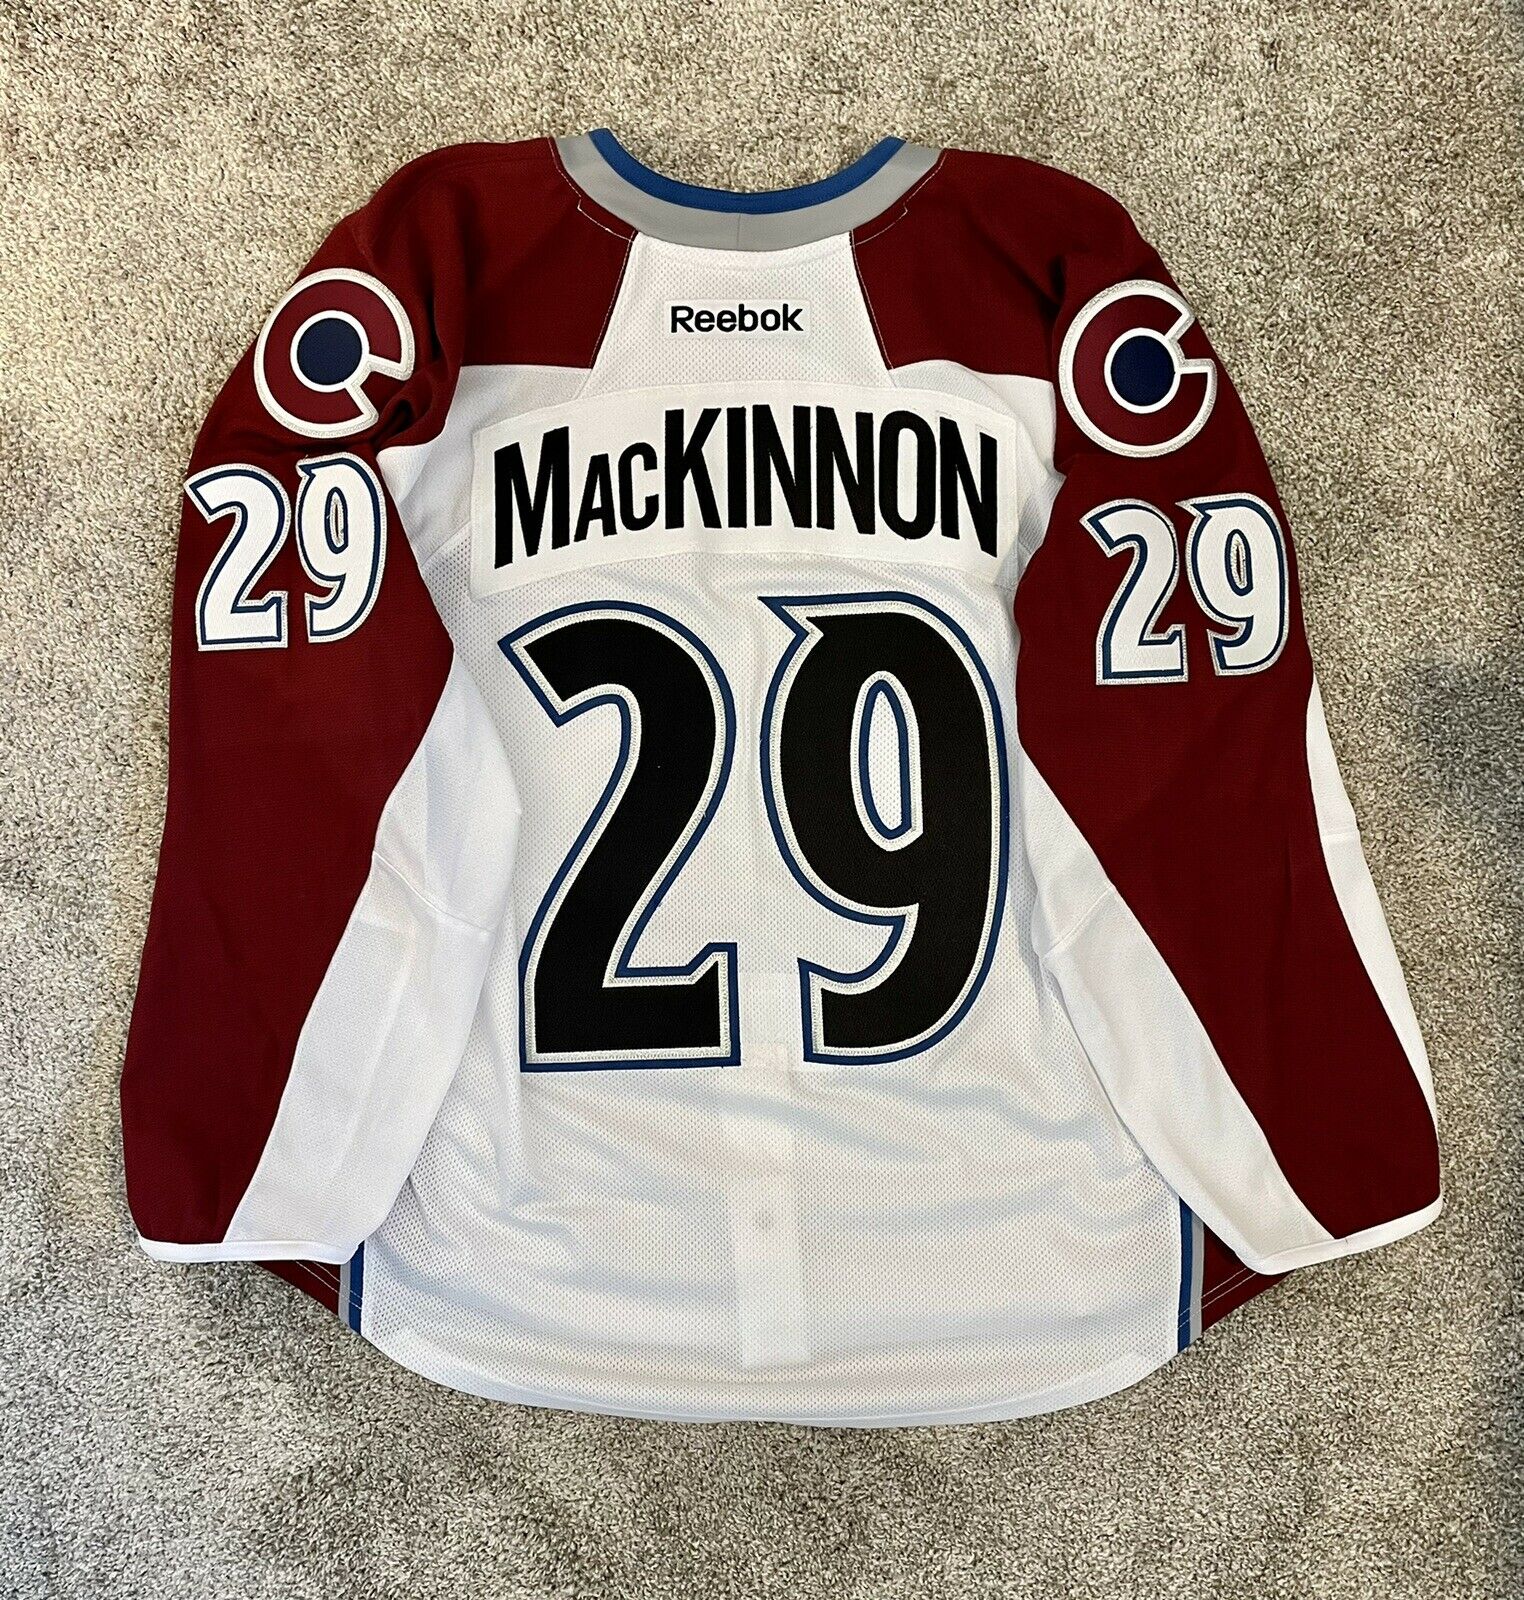 Colorado Avalanche Nathan Mackinnon #29 Reebok Authentic Jersey Sz. 50